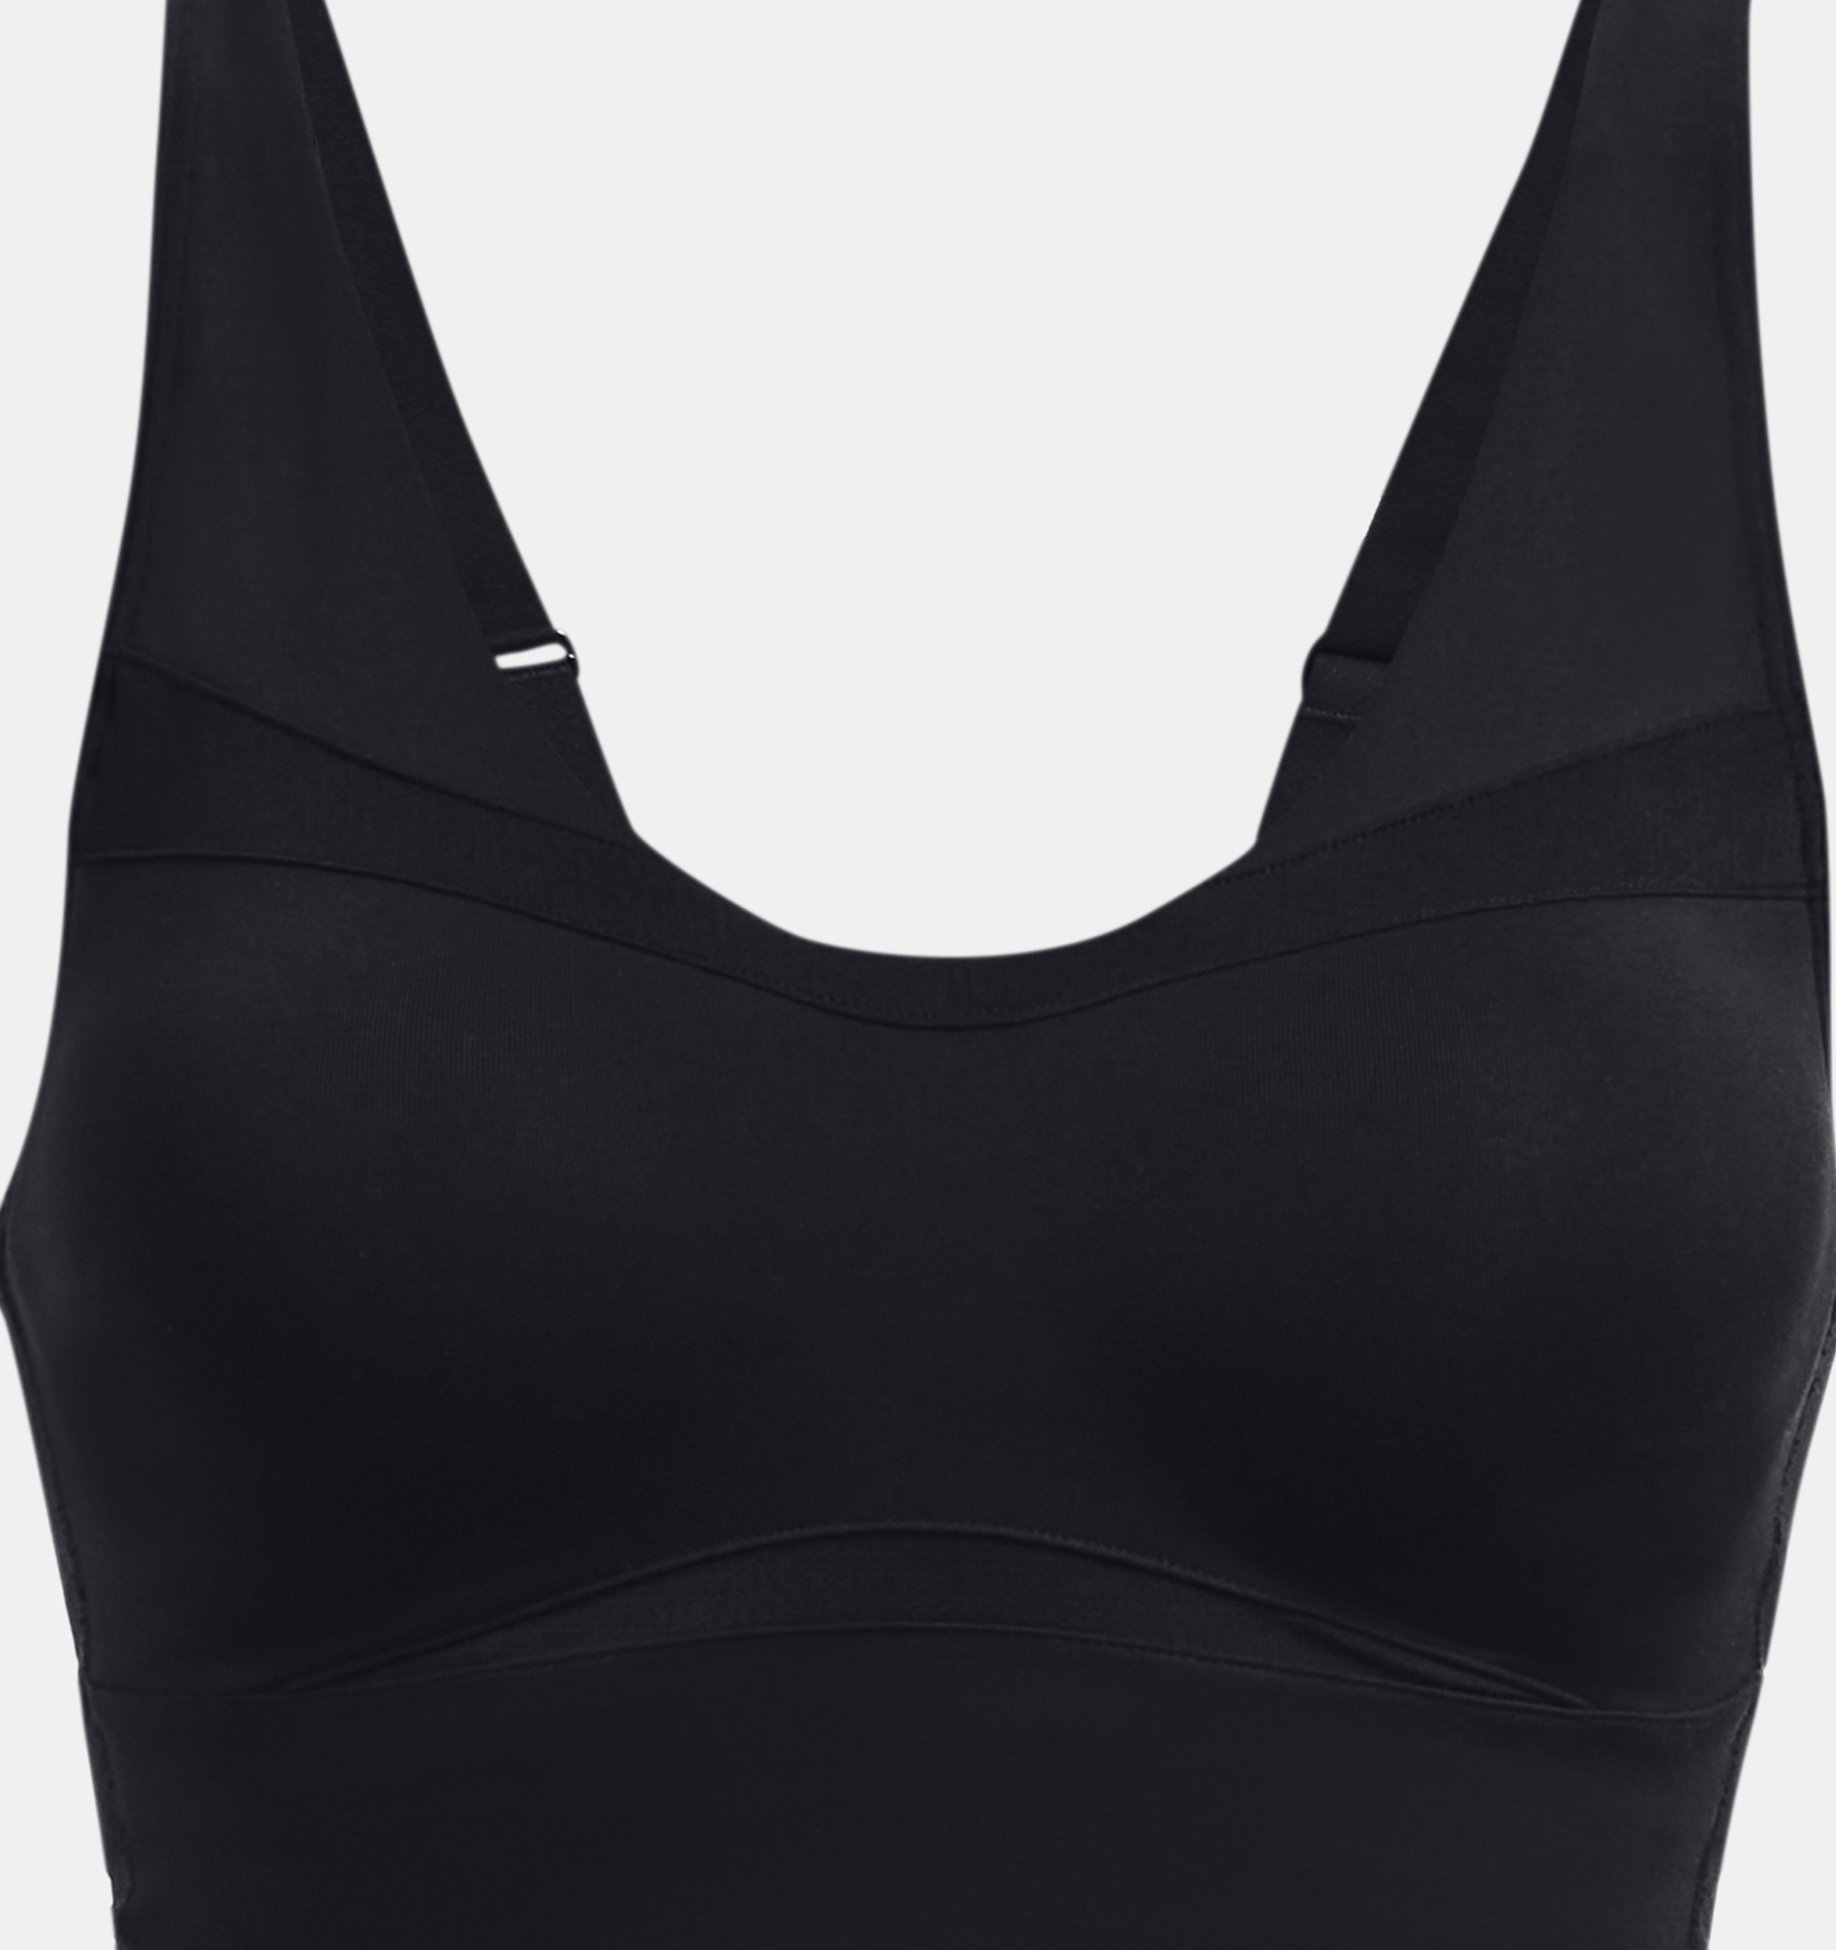 bra png - Поиск в Google  Sports bra design, Fashion inspiration design,  Evolution of fashion